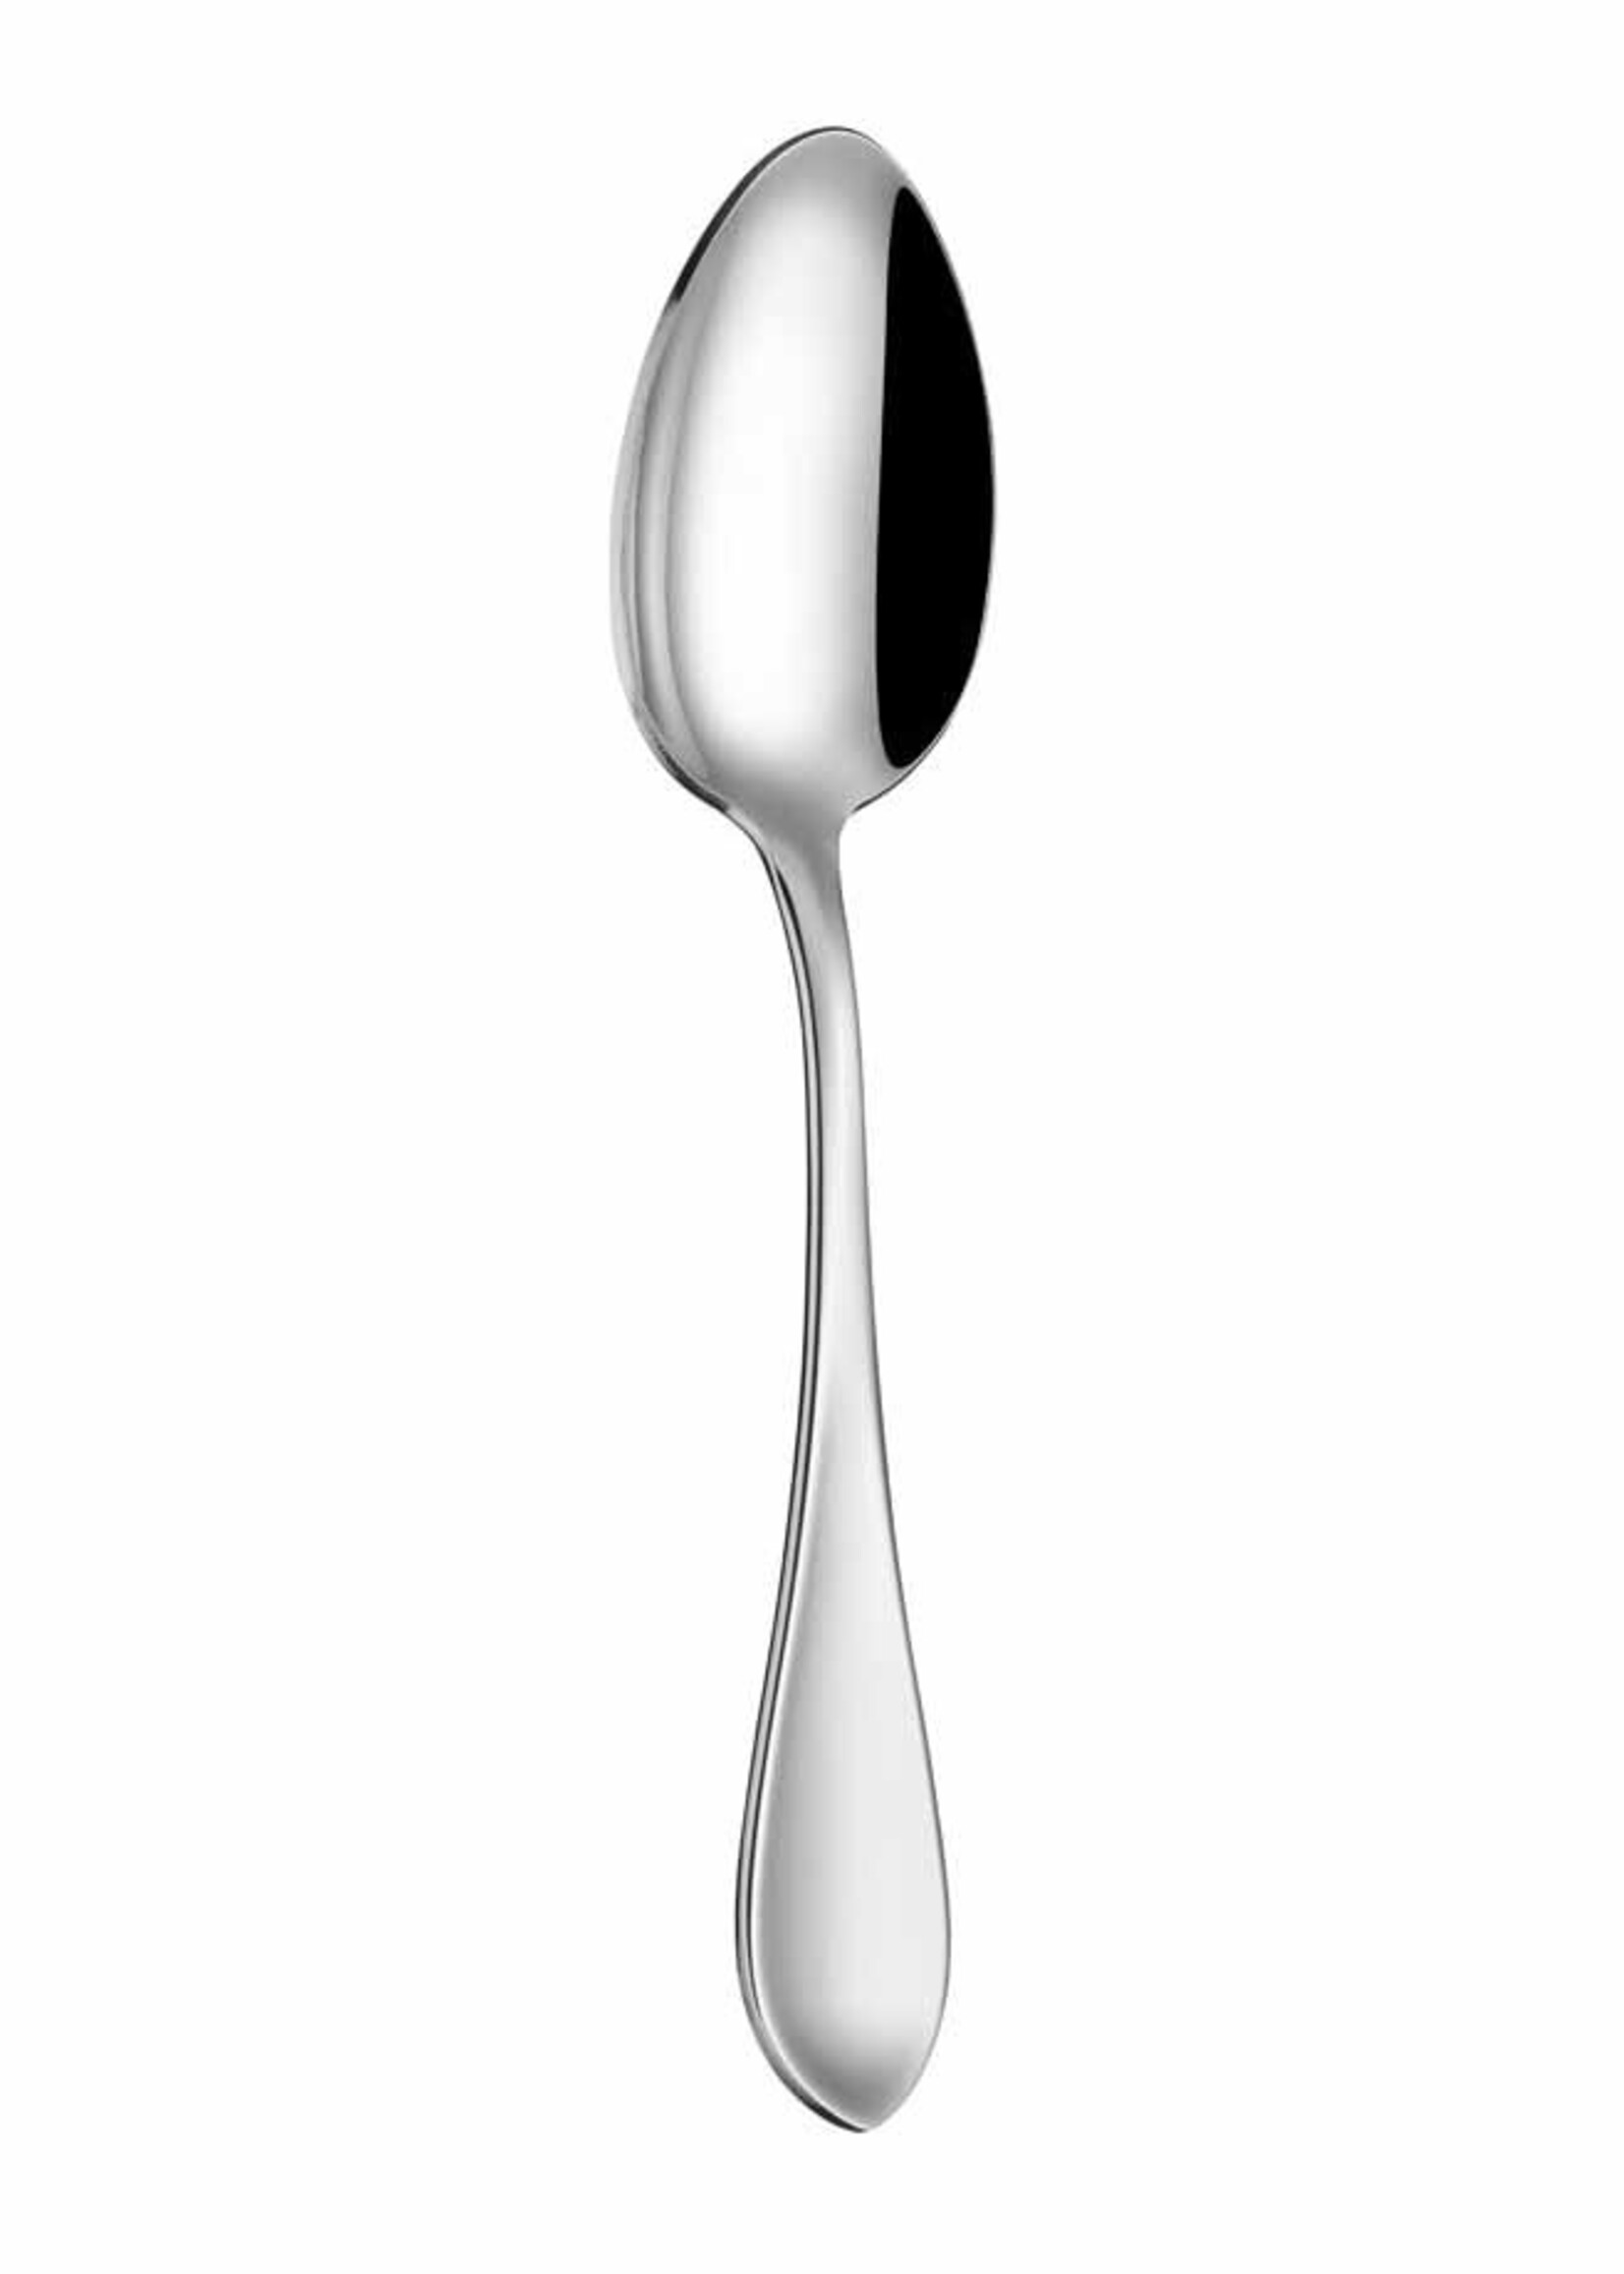 Batta Table Spoon - Stainless Steel – 6300 MODEL - Battata